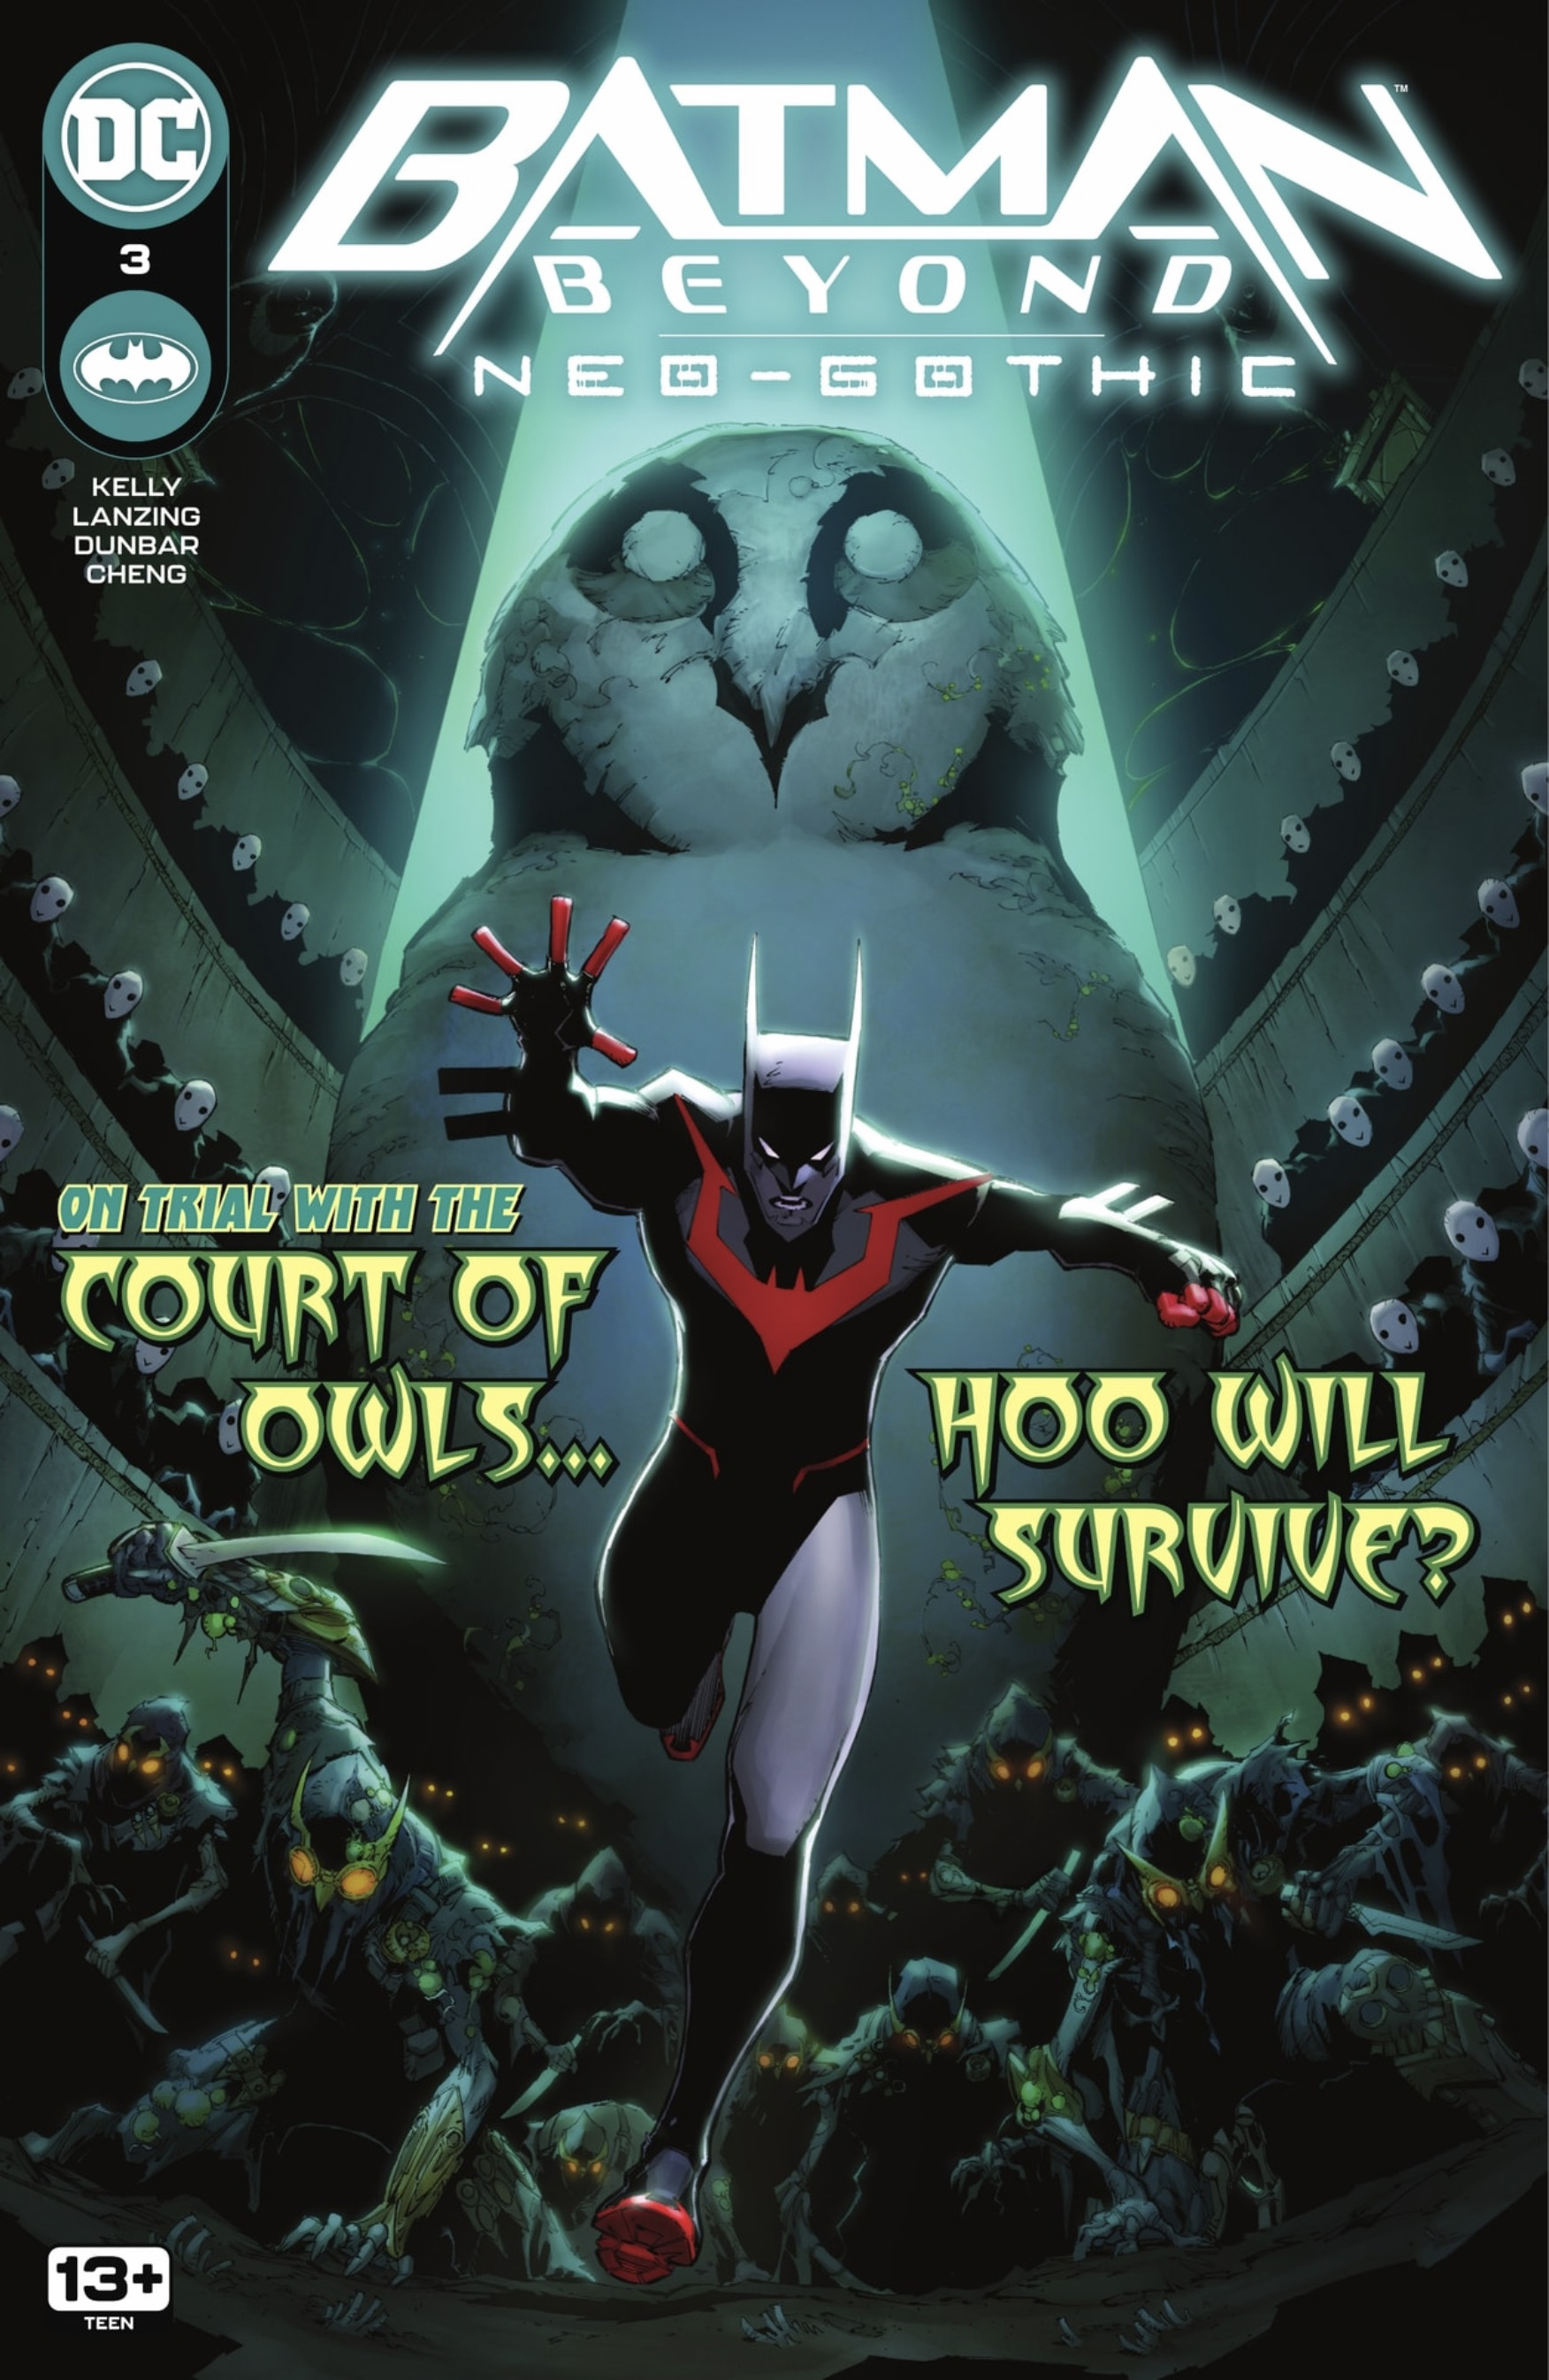 Read online Batman Beyond: Neo-Gothic comic -  Issue #3 - 1